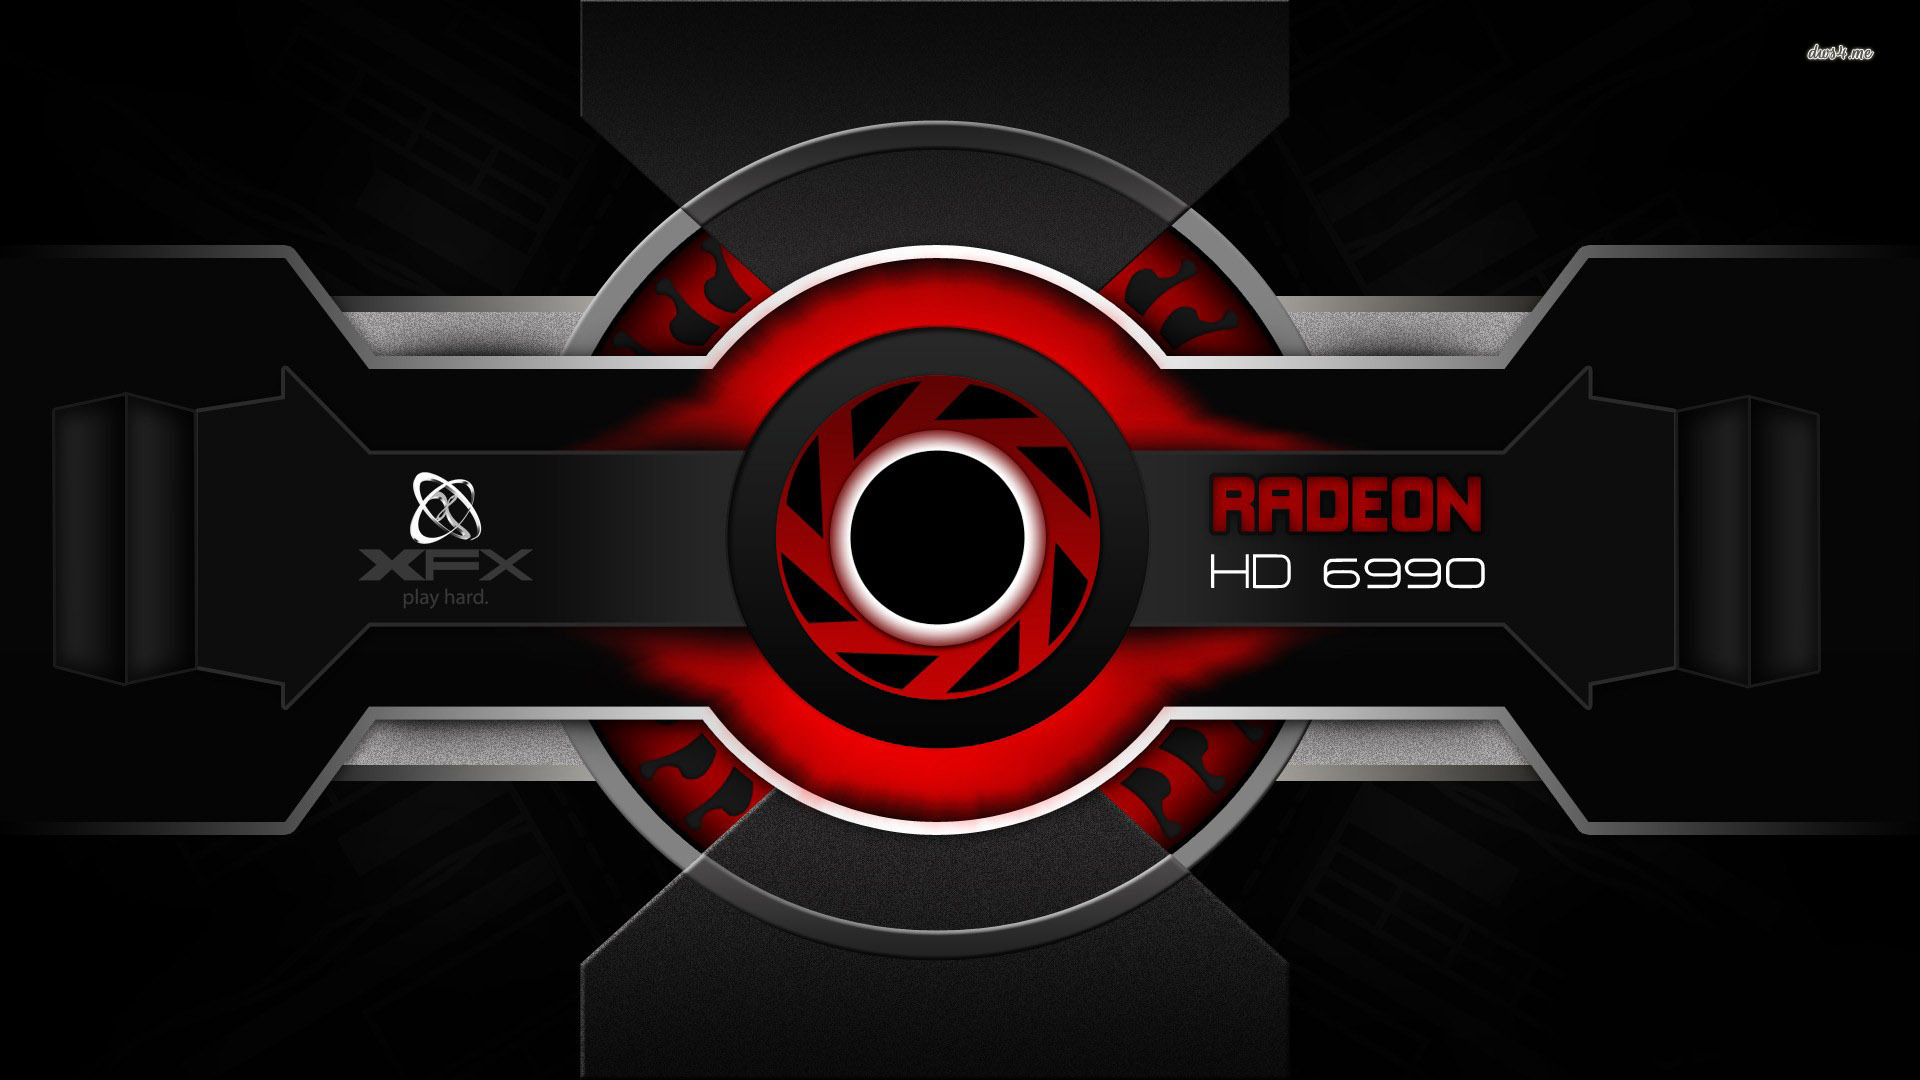 AMD Radeon wallpaper 1280x800 AMD Radeon wallpaper 1366x768 AMD Radeon 1920x1080